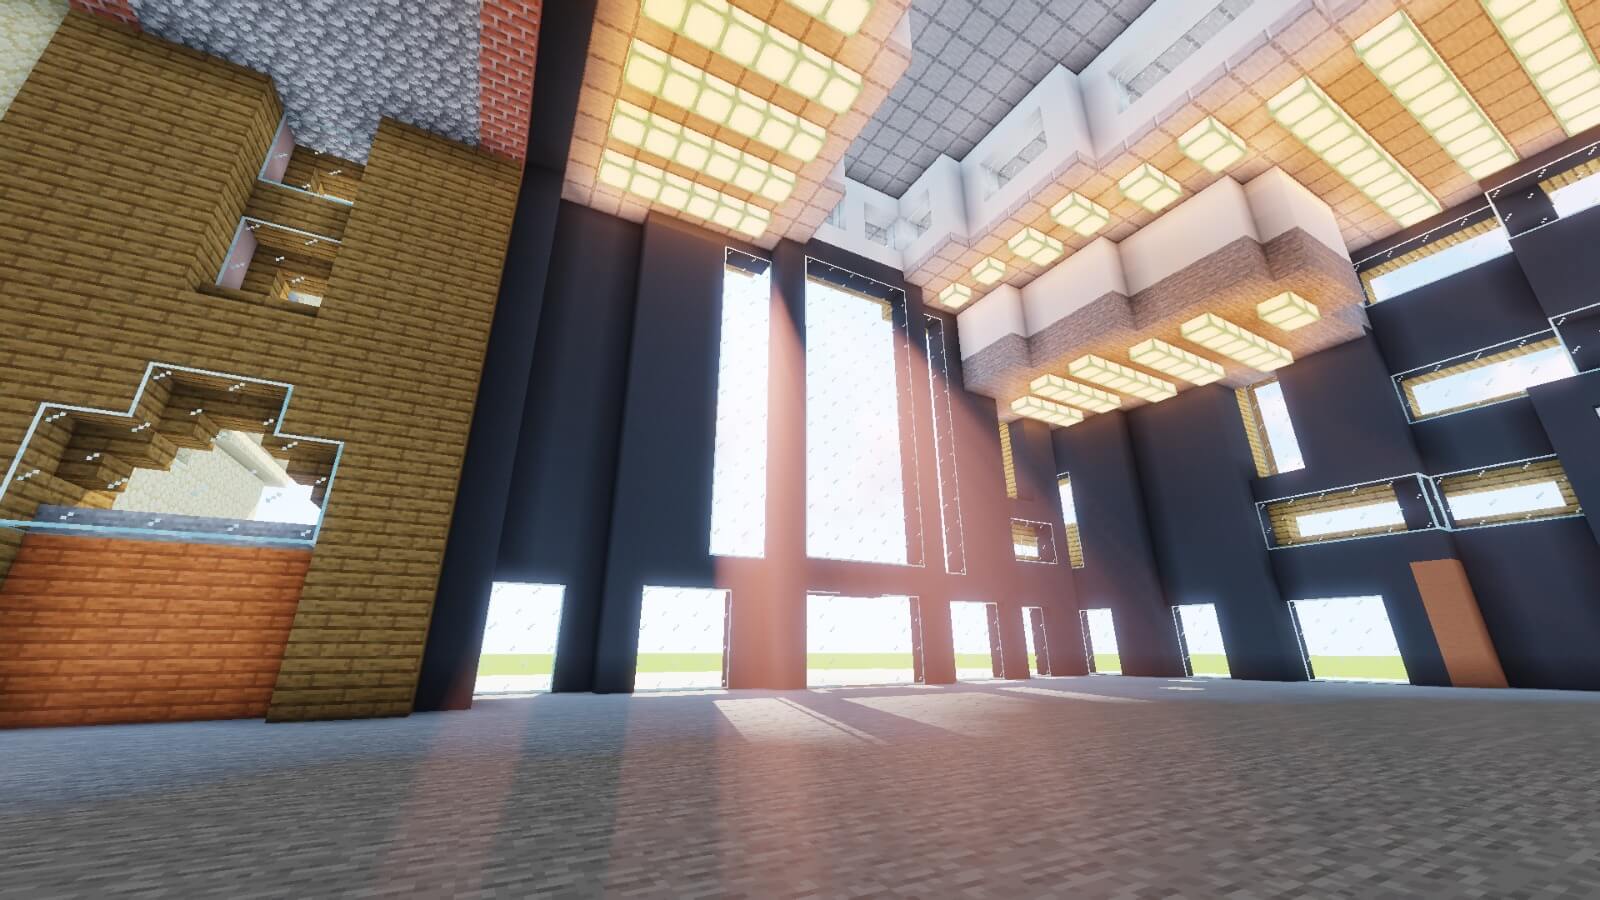 Interior view of the Minecraft Colston Hall